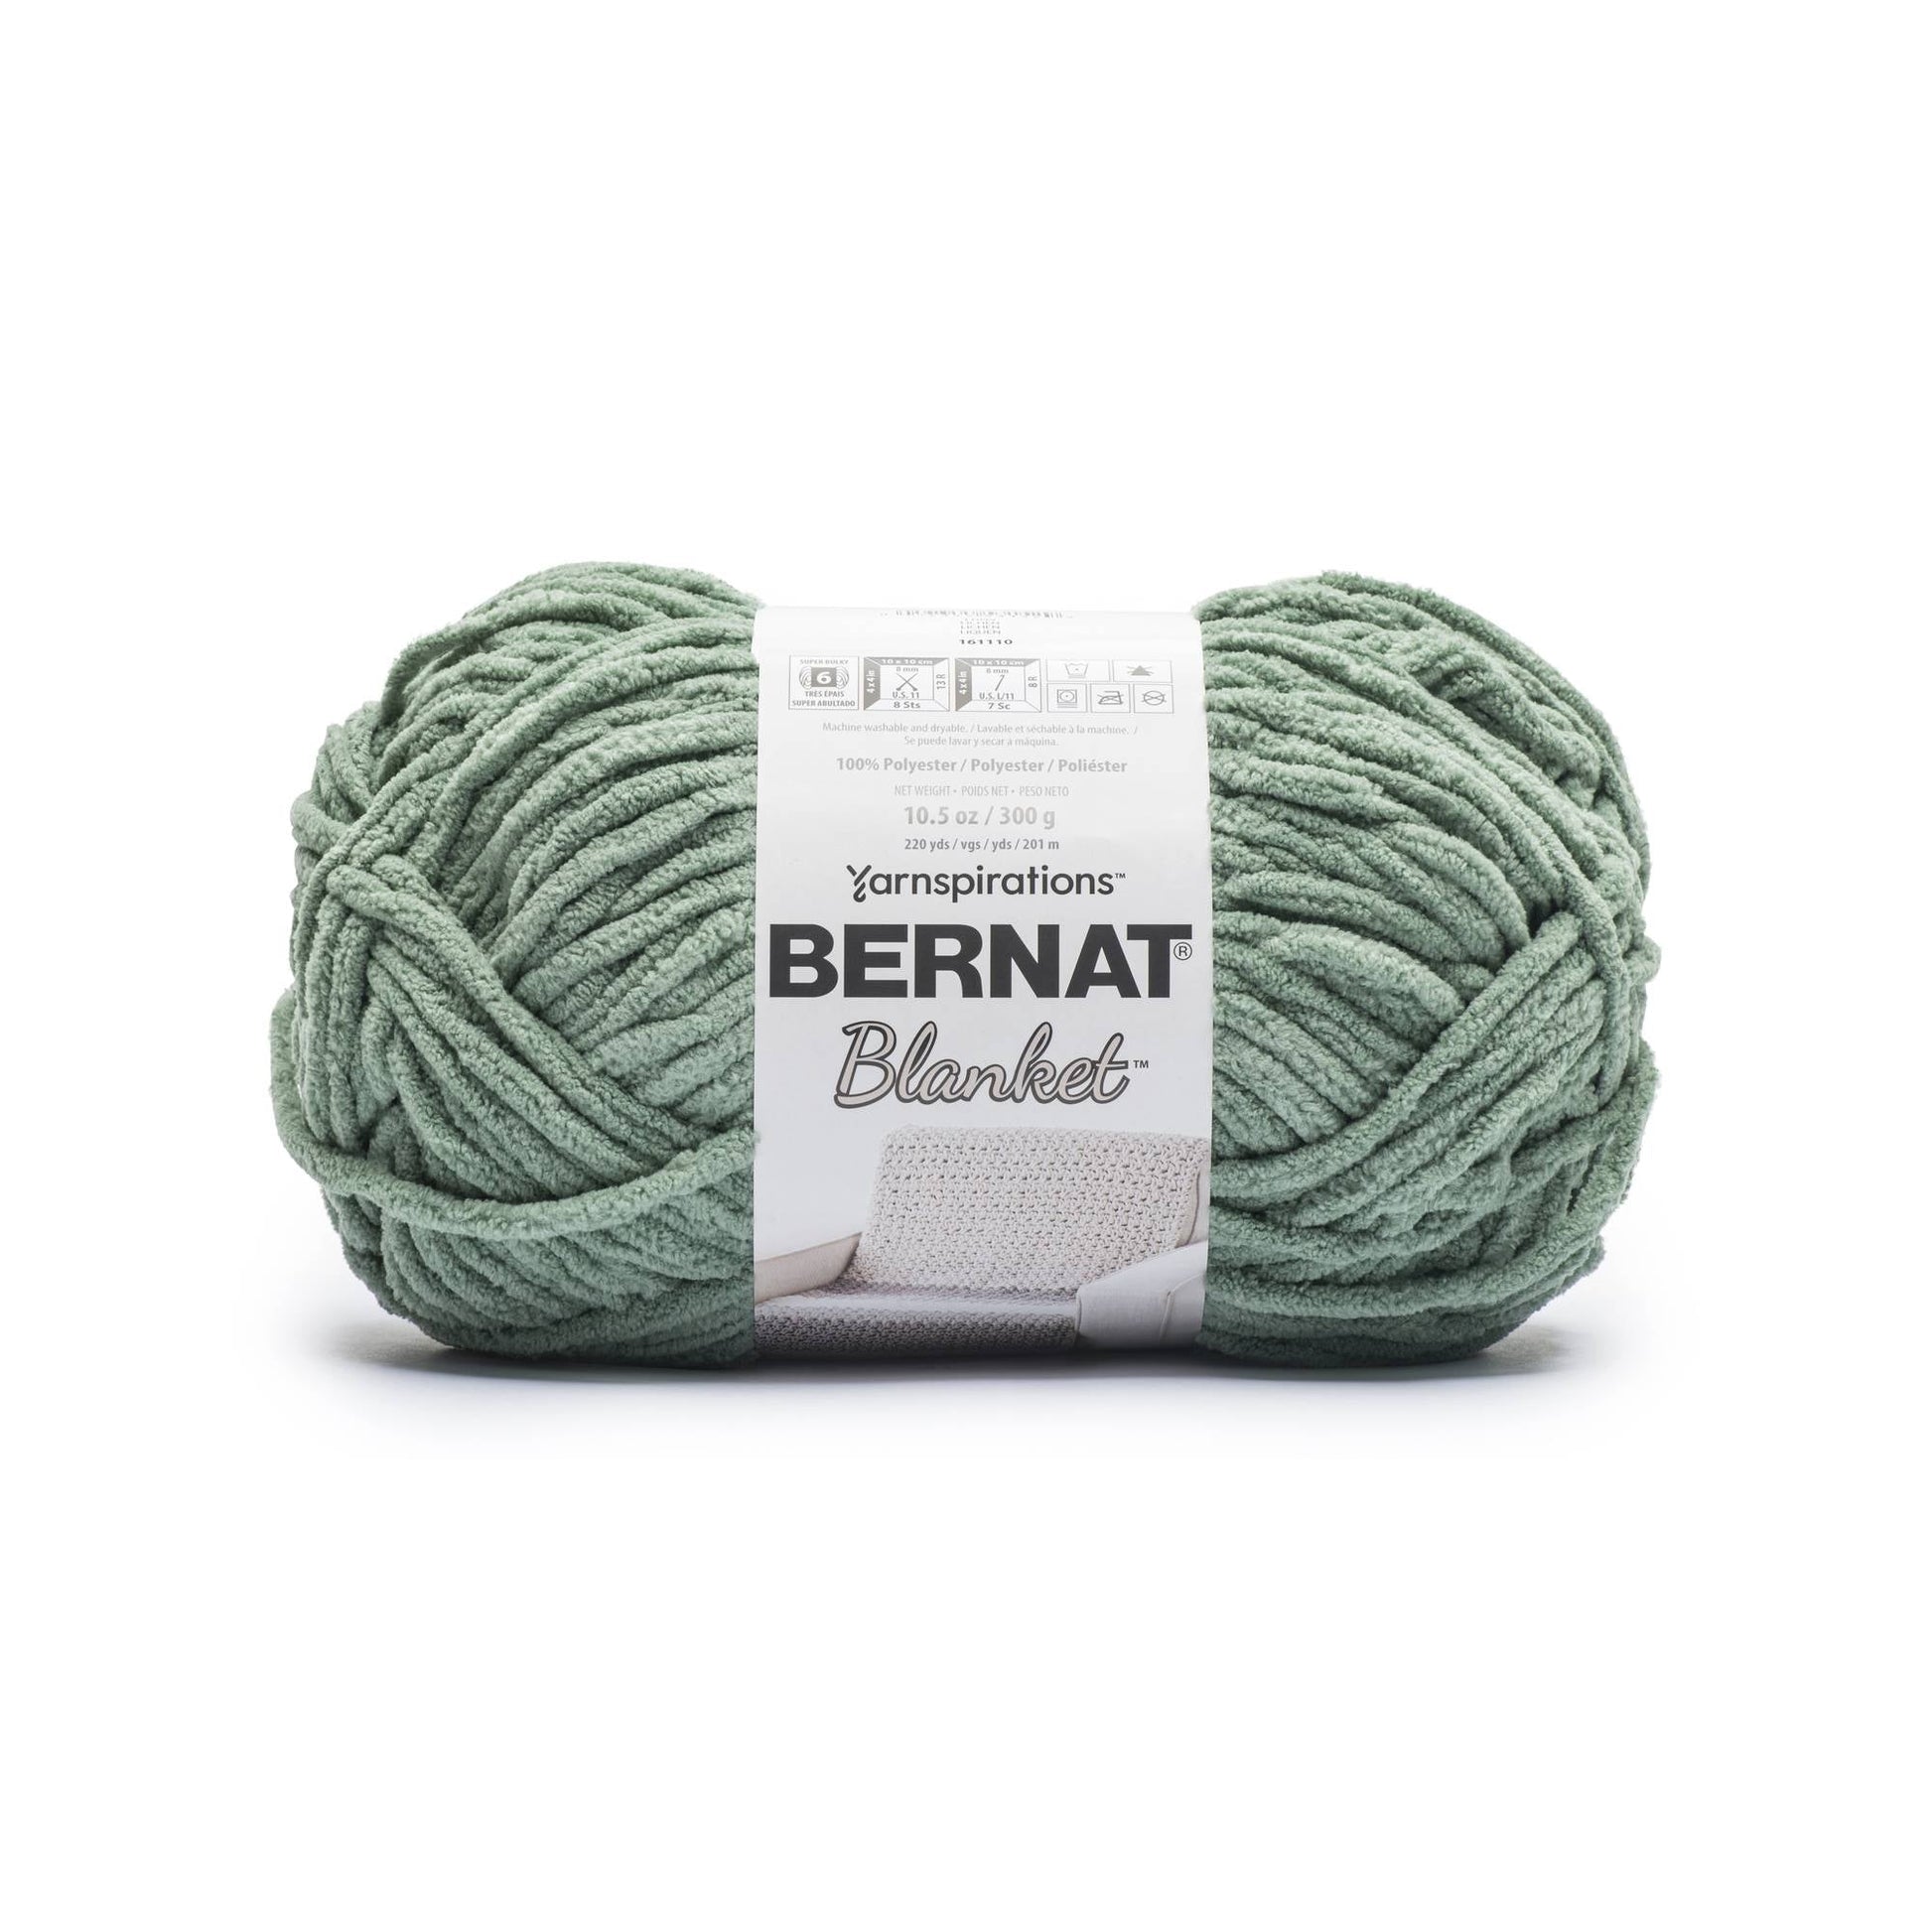 Bernat Blanket Yarn (300g/10.5oz) Lichen